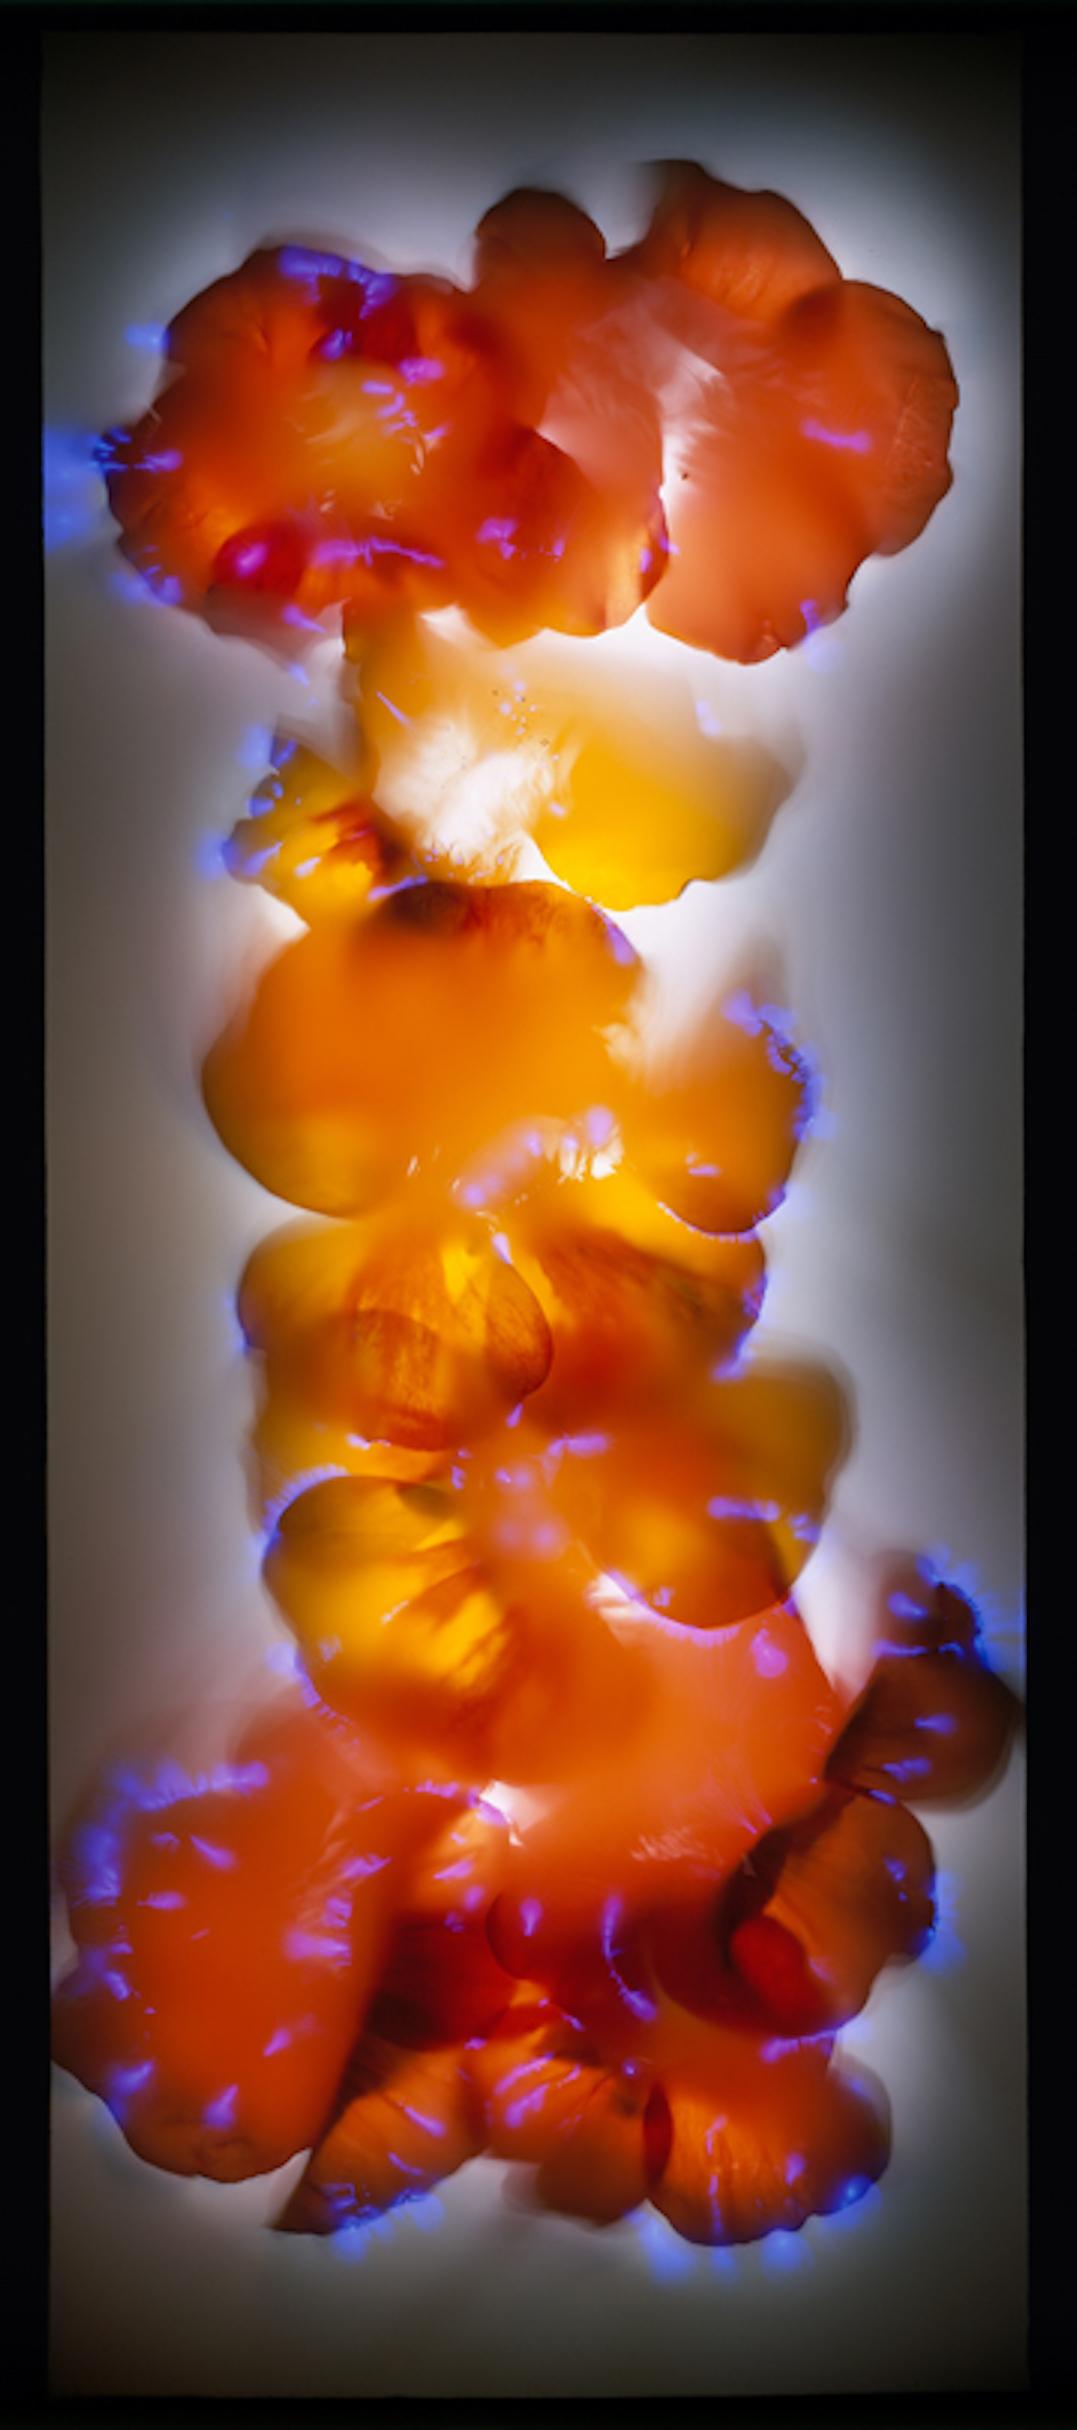 Robert Buelteman Color Photograph - Nasturtium Blossoms, photogram, color photography, floral, orange, bright